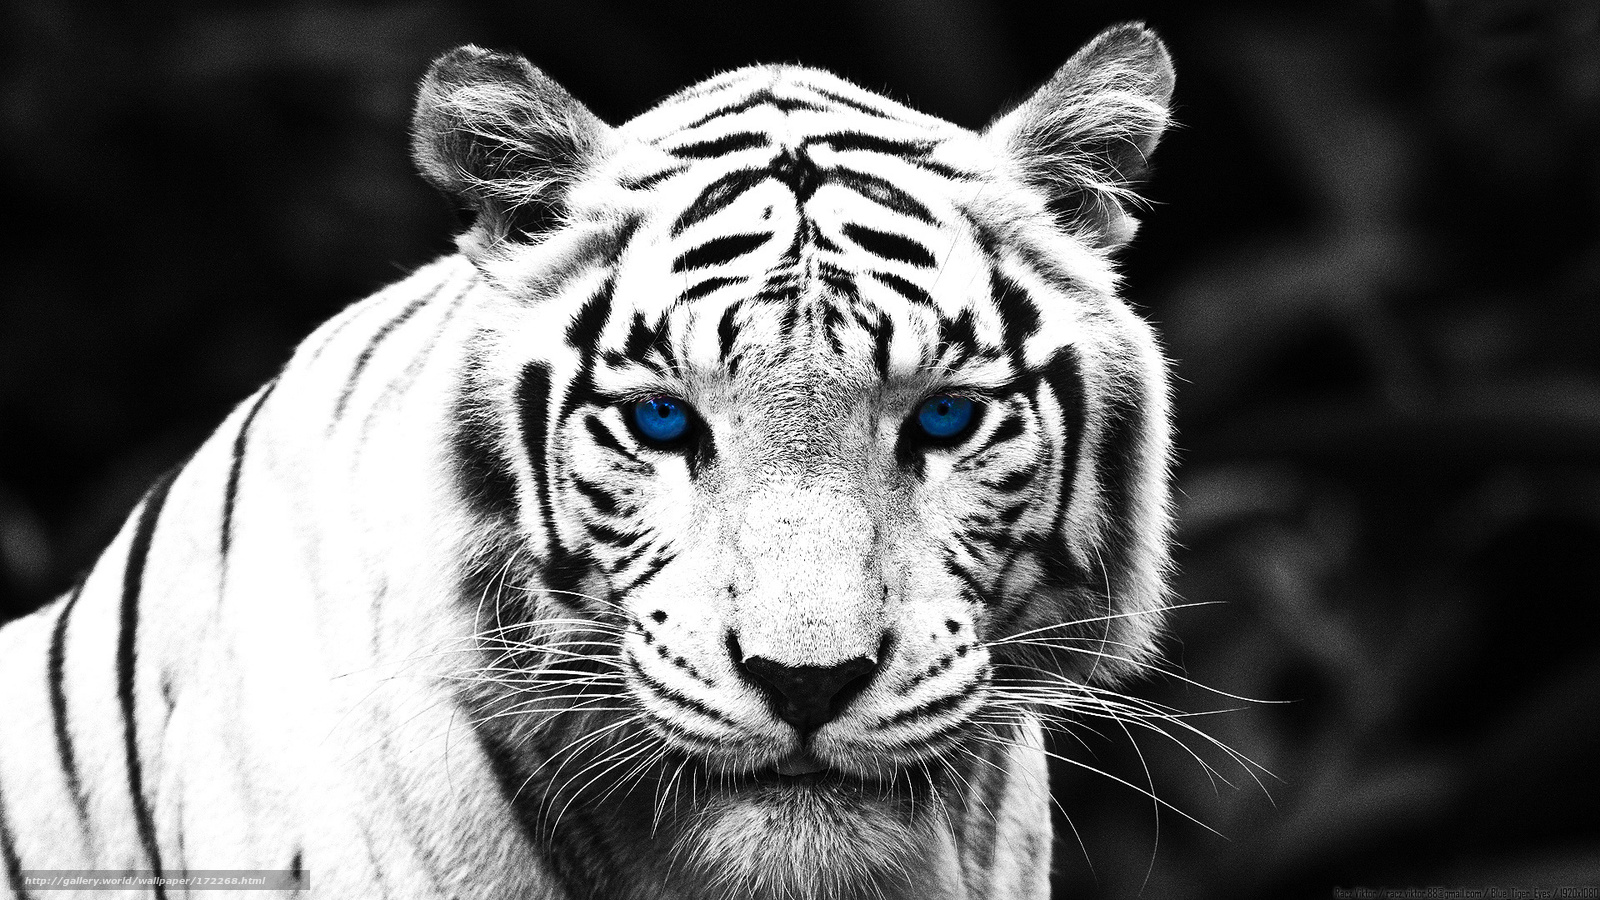 Download wallpaper tiger black and white desktop wallpaper in 1600x900